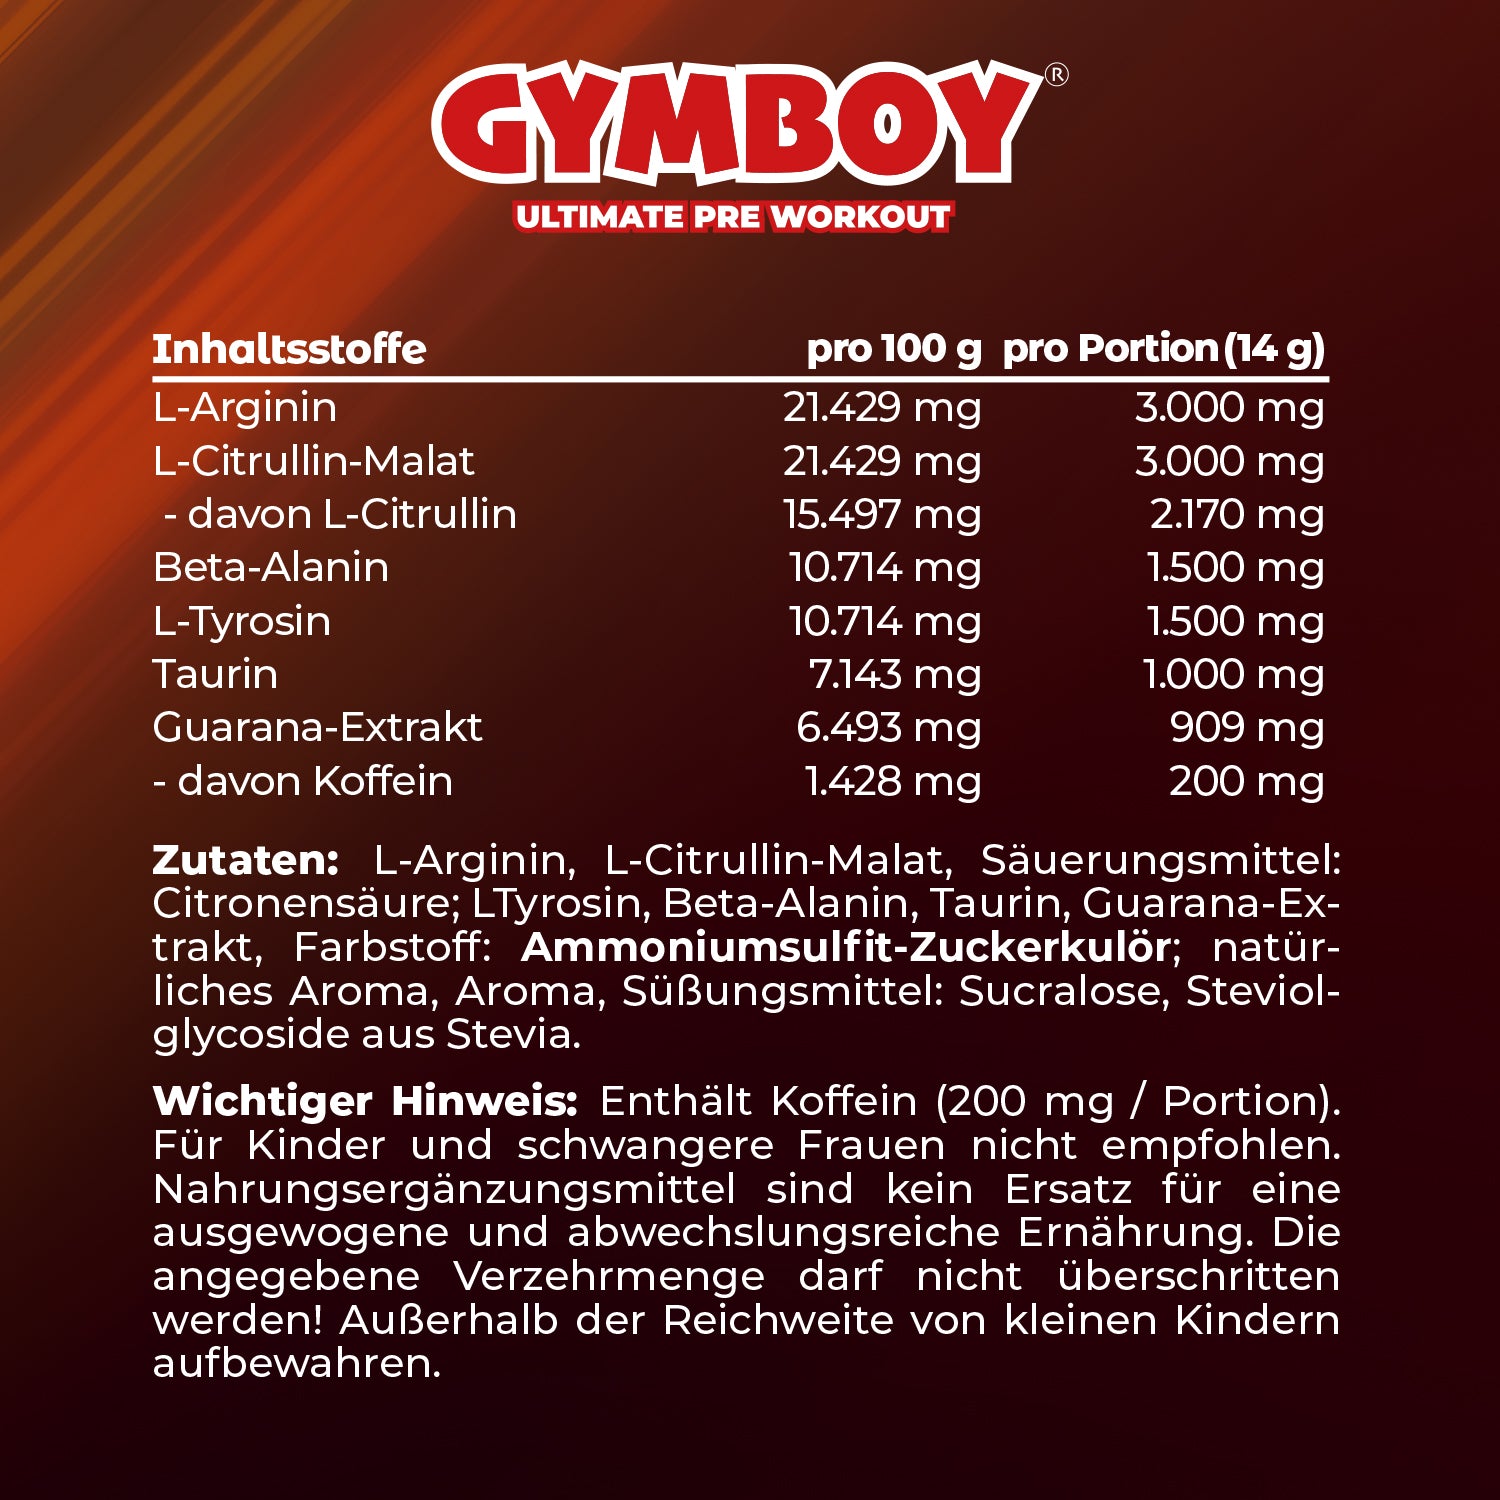 GYMBOY® – Pre Workout Kickass Kola Edition 392 g